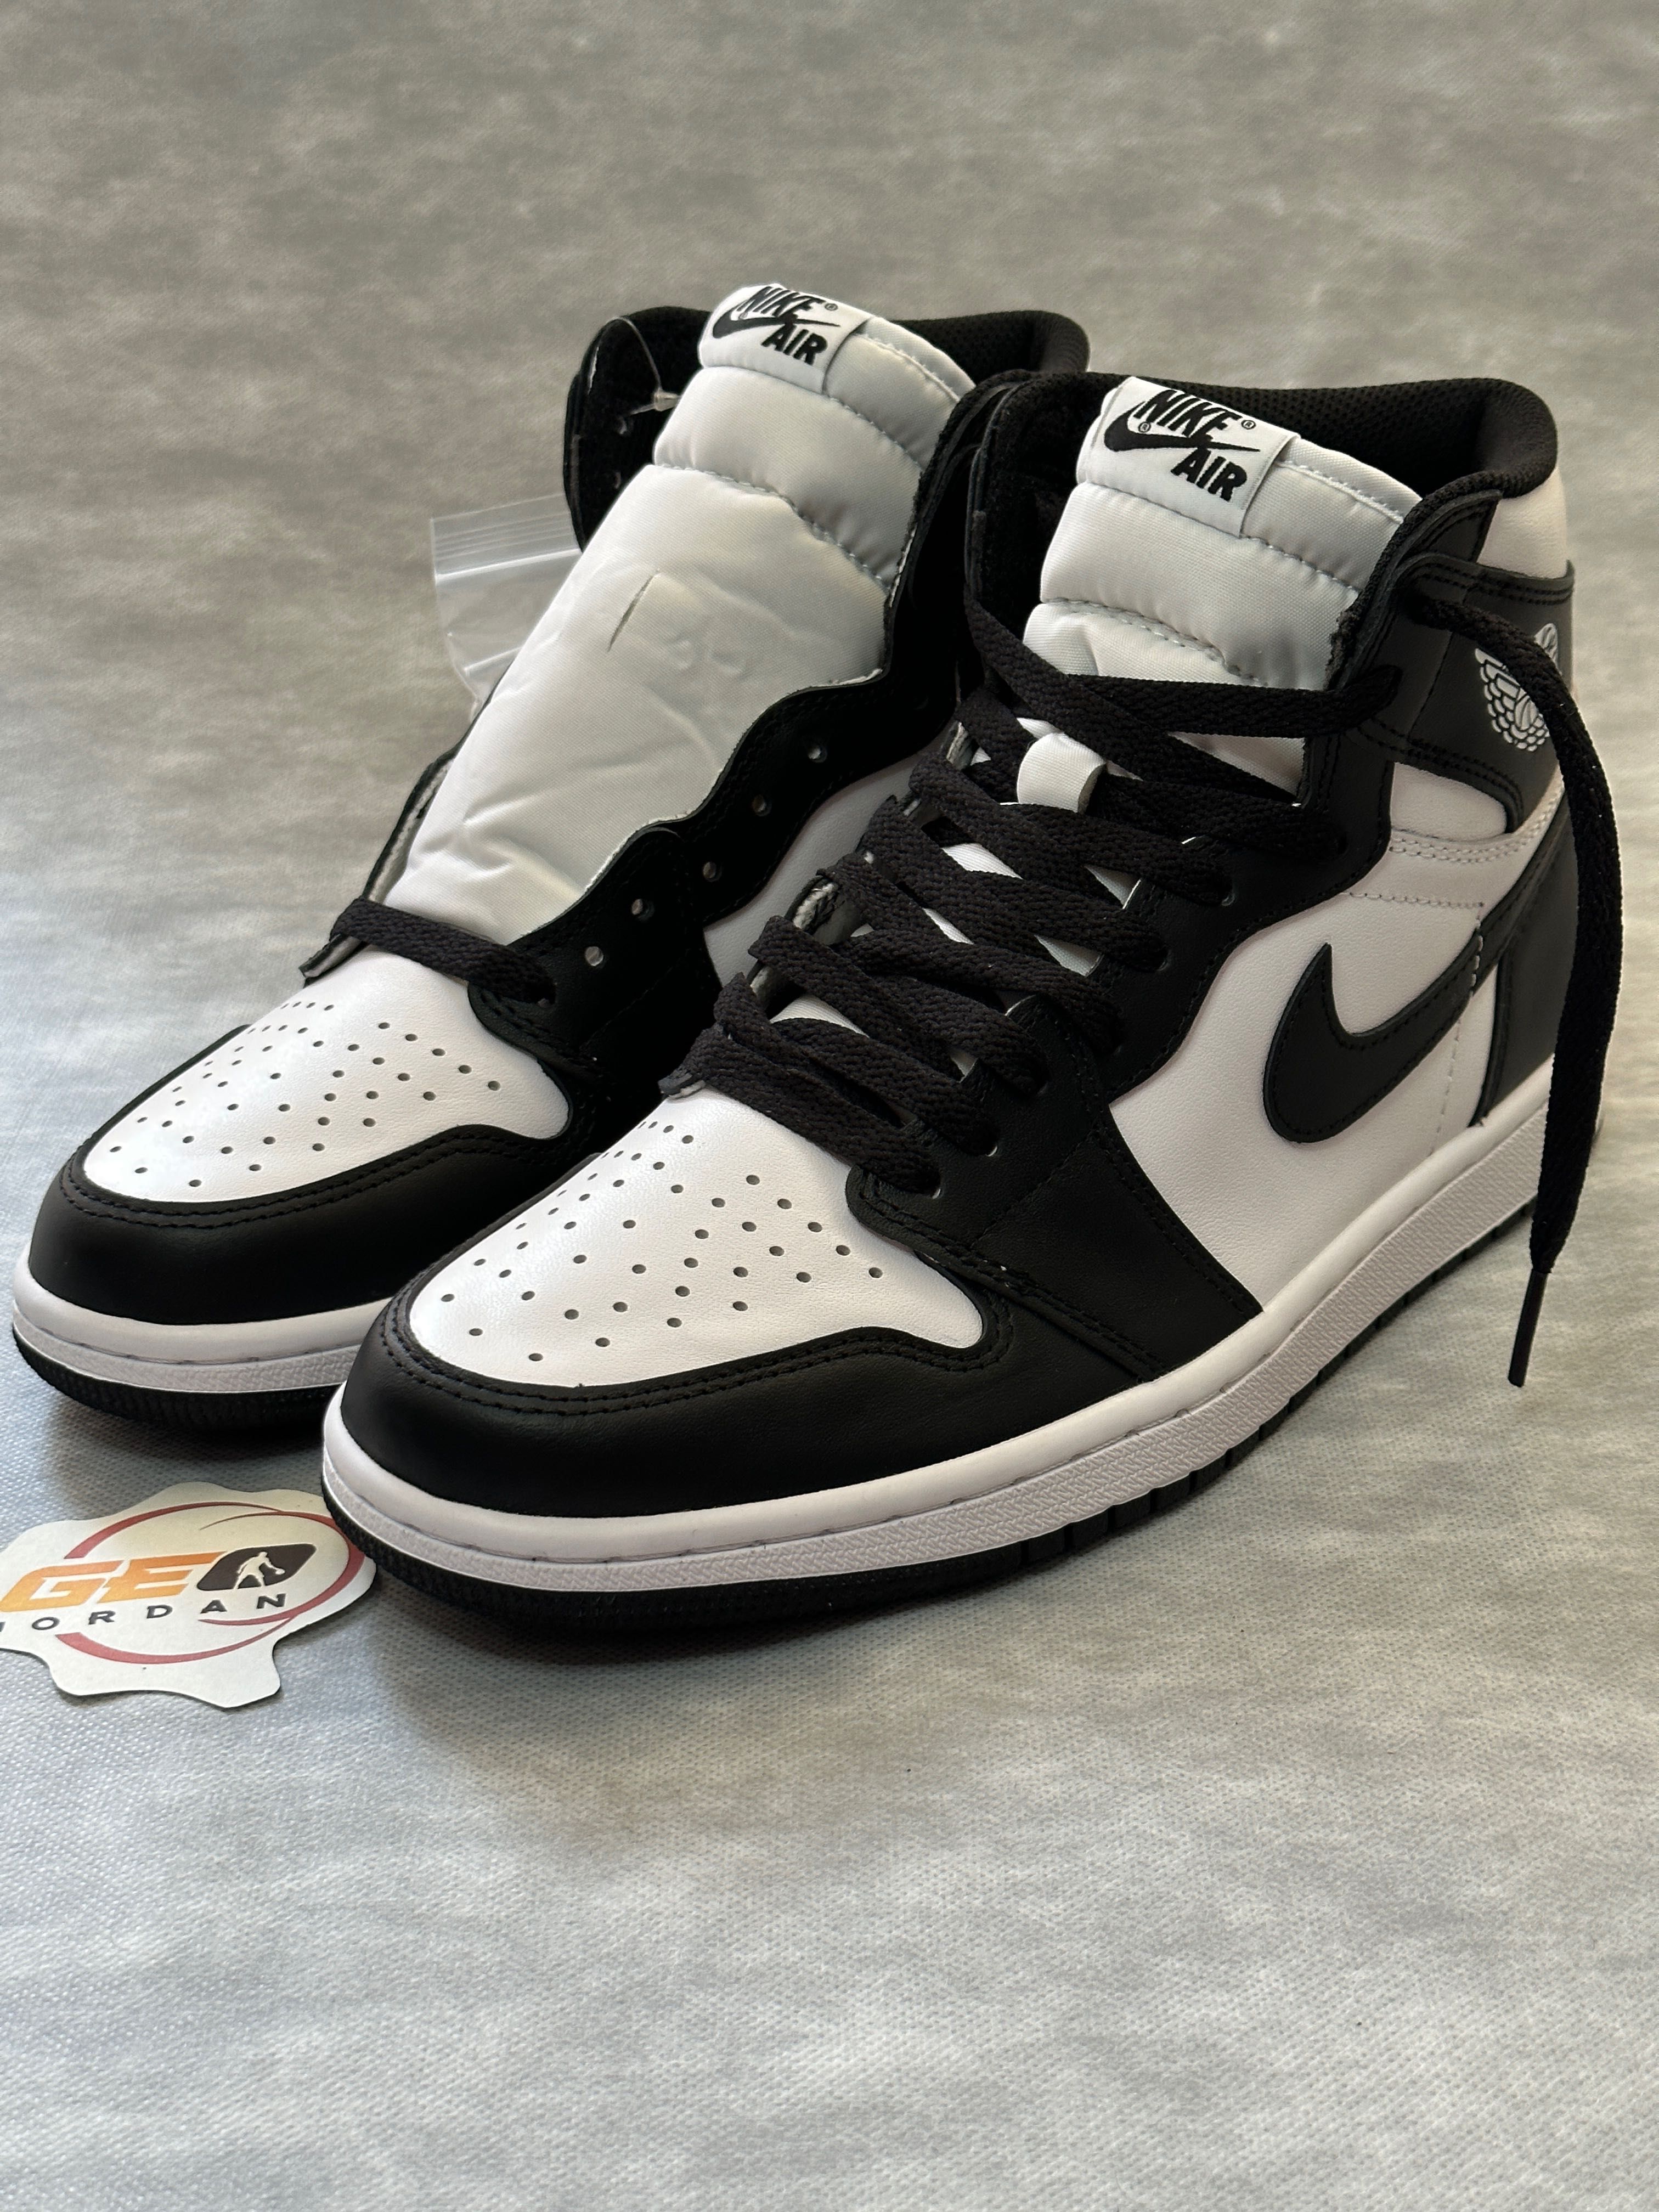 război Arne Grad Celsius  Nike Air Jordan 1 Retro High Black/White Panda Bucuresti Sectorul 6 • OLX.ro